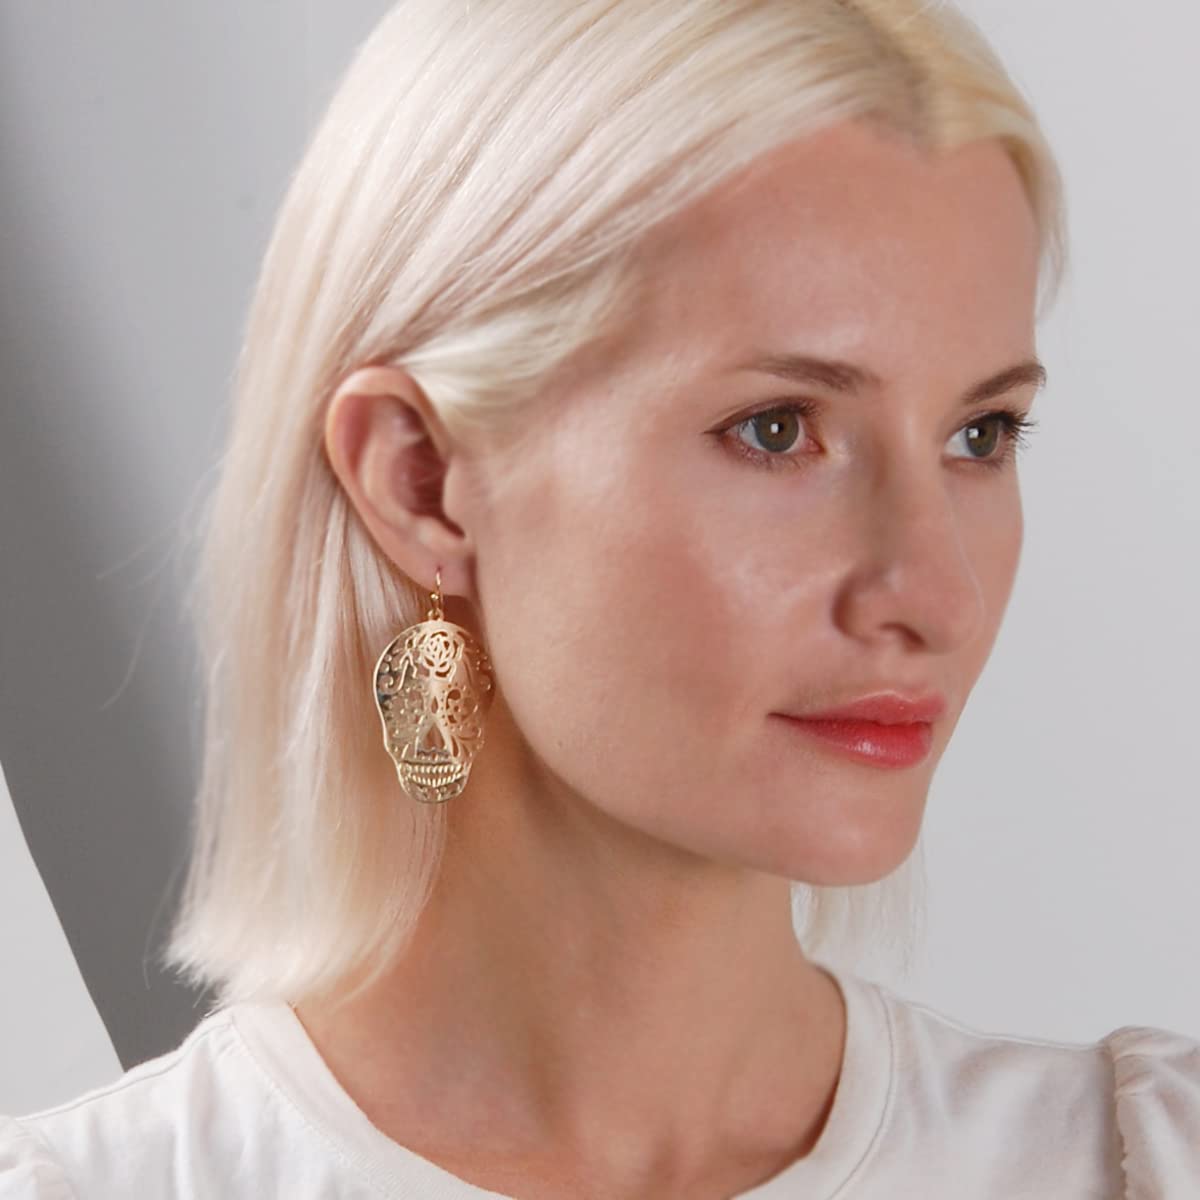 Humble Chic Sugar Skull Earrings for Women - Gold Tone Filigree Gothic Dangle Earrings